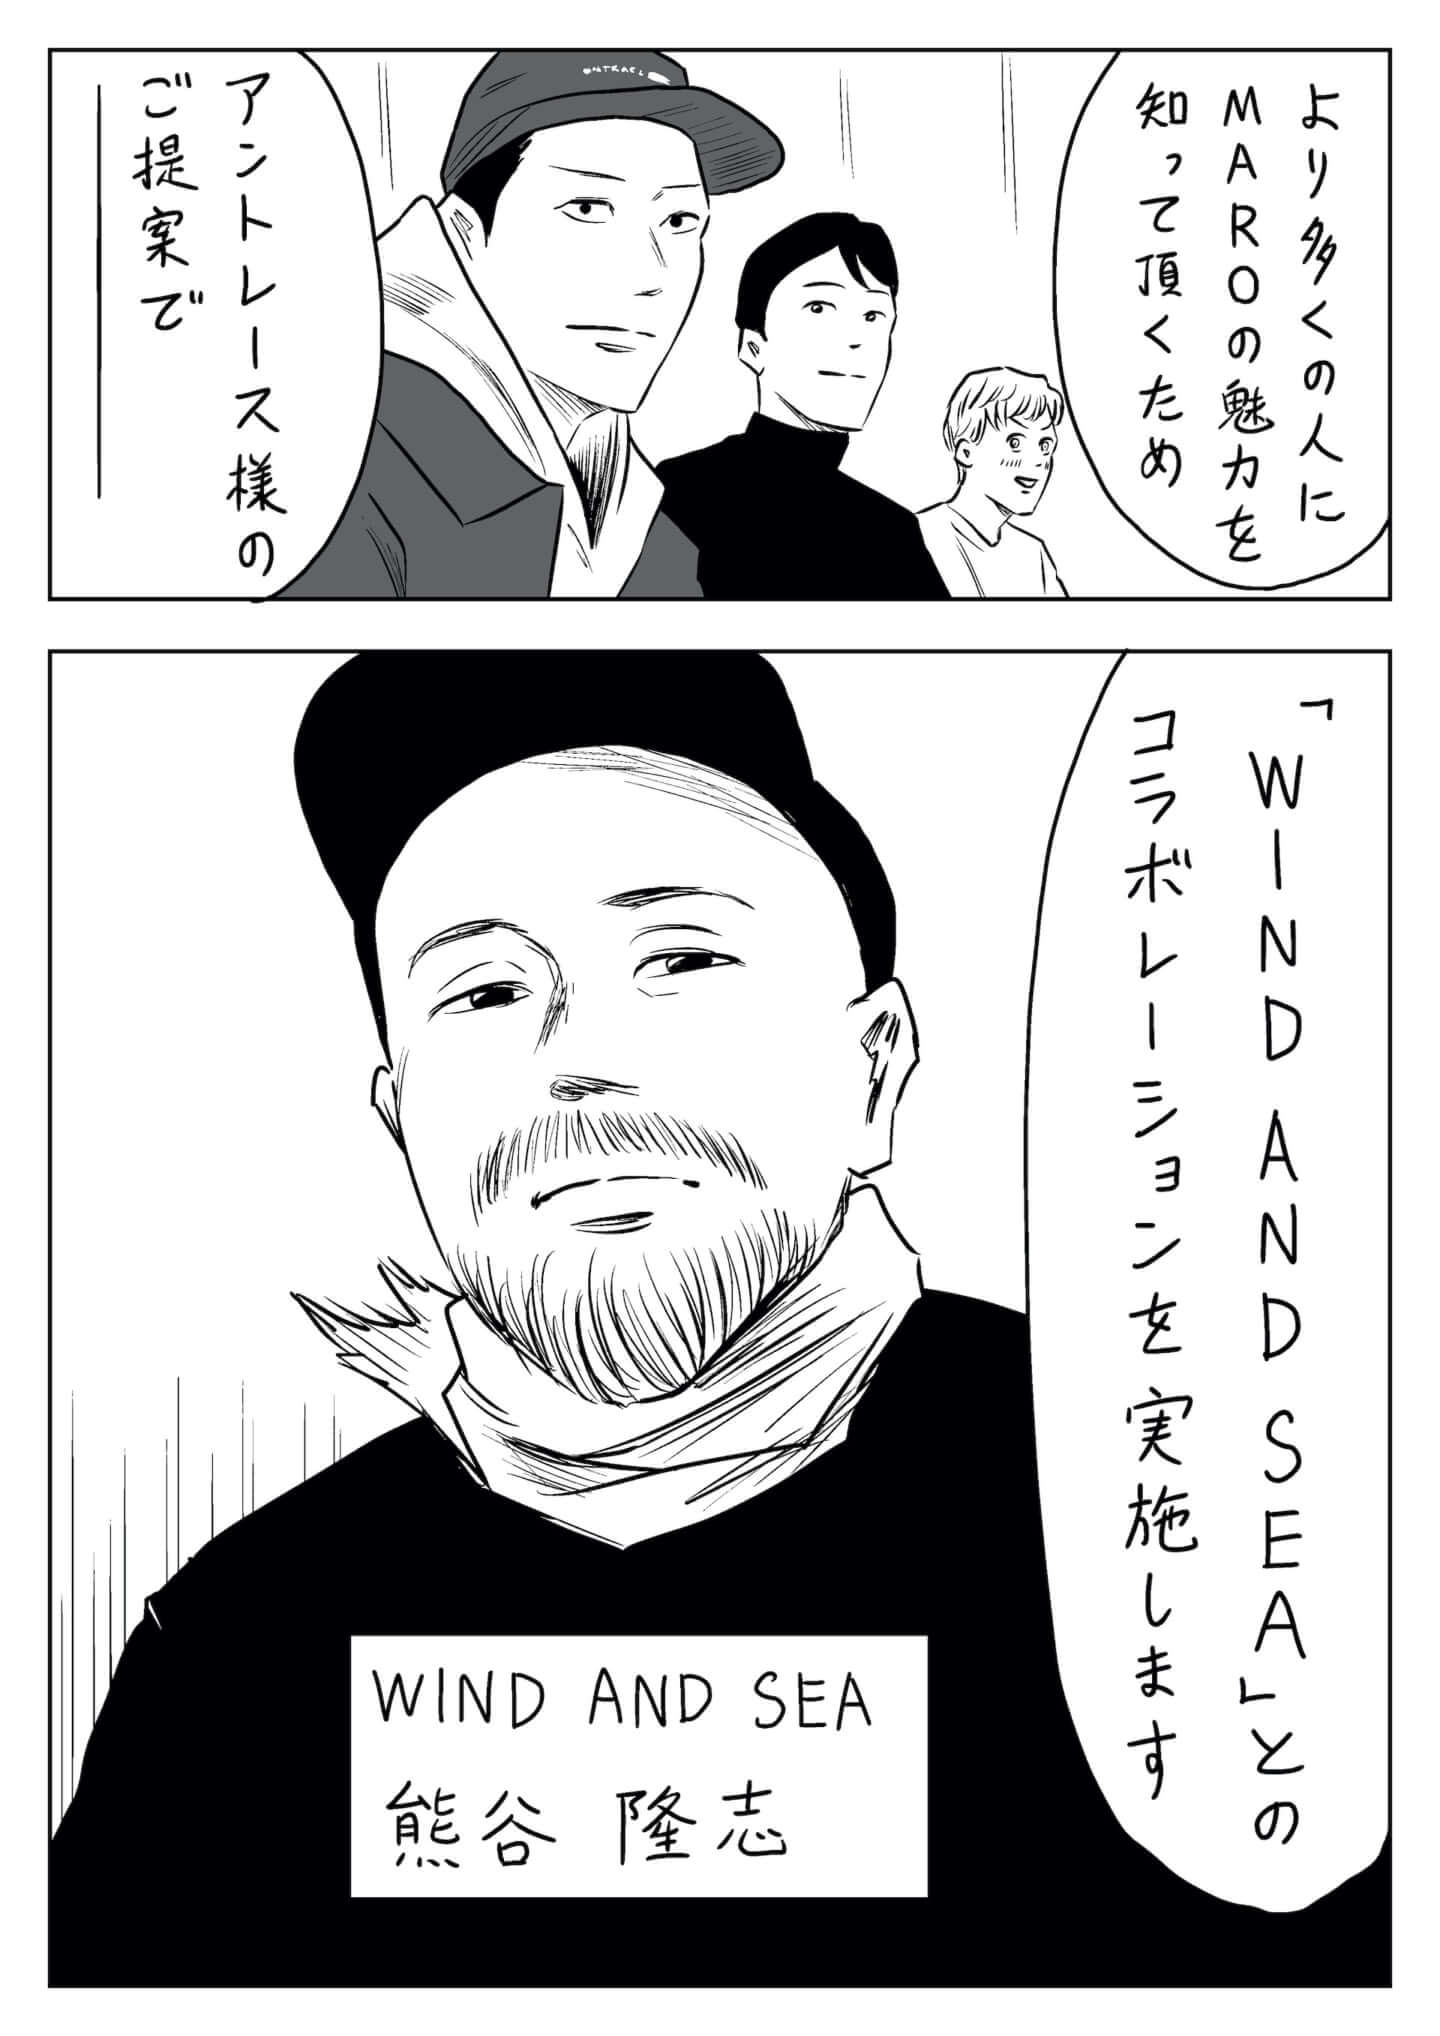 WIND AND SEA × 左利きのエレン × MARO